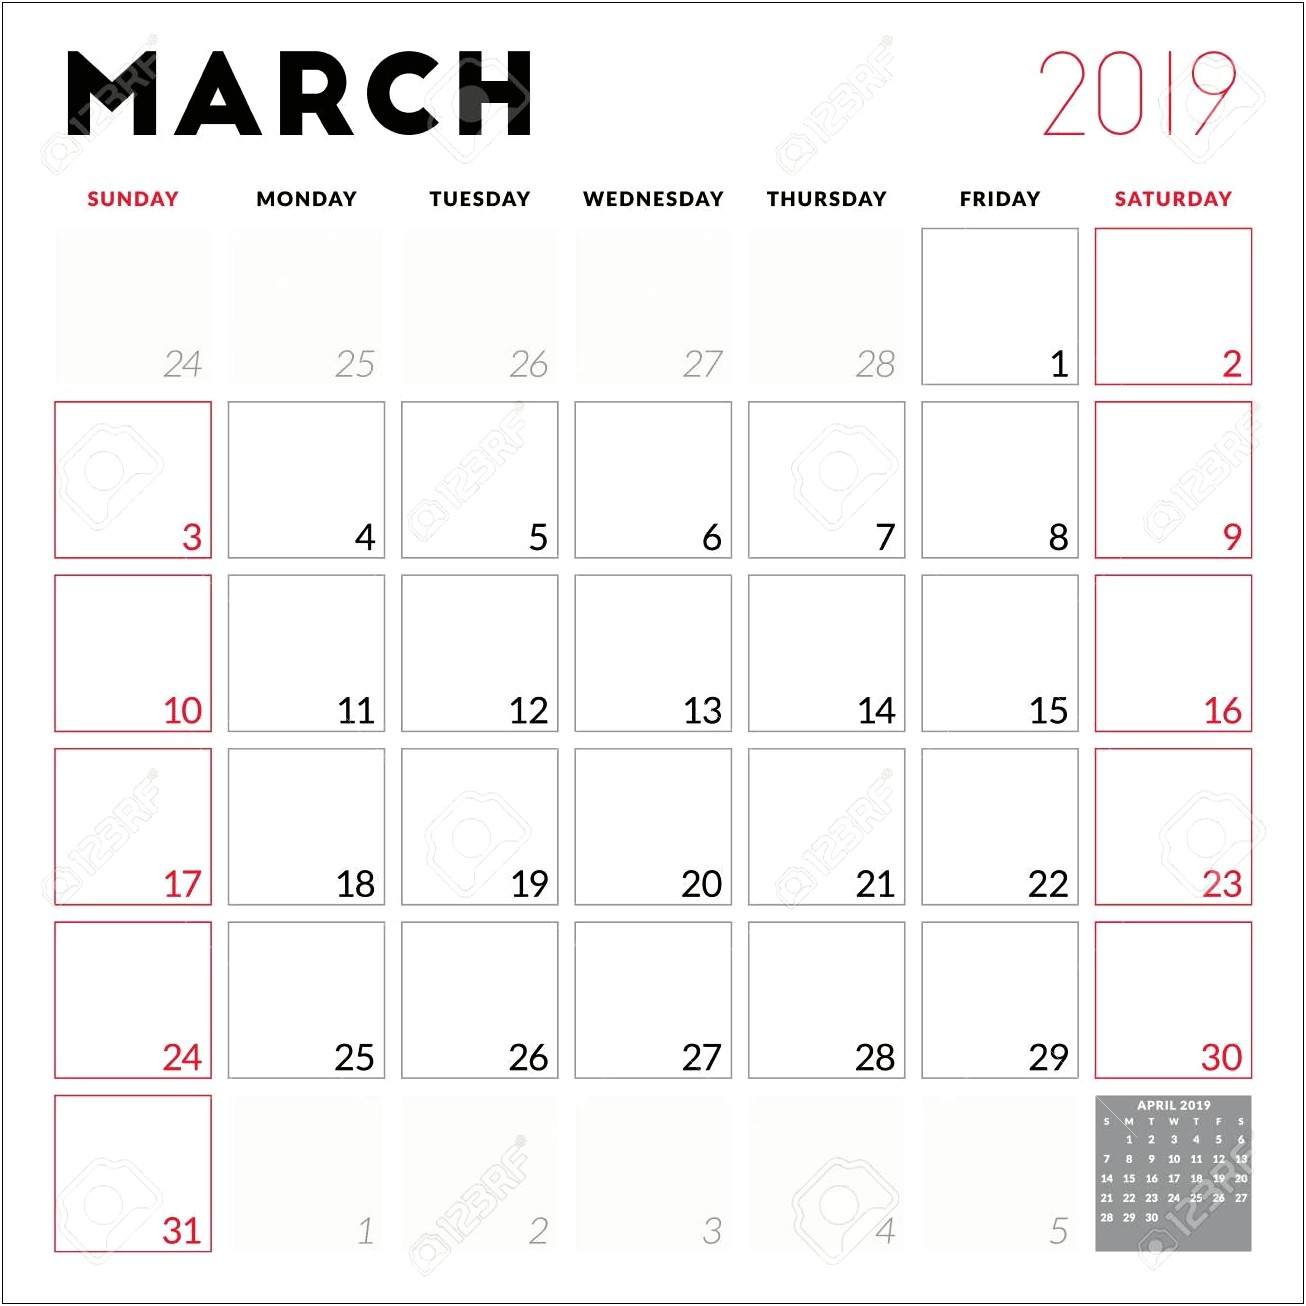 Free Blank March 2019 Calendar Template